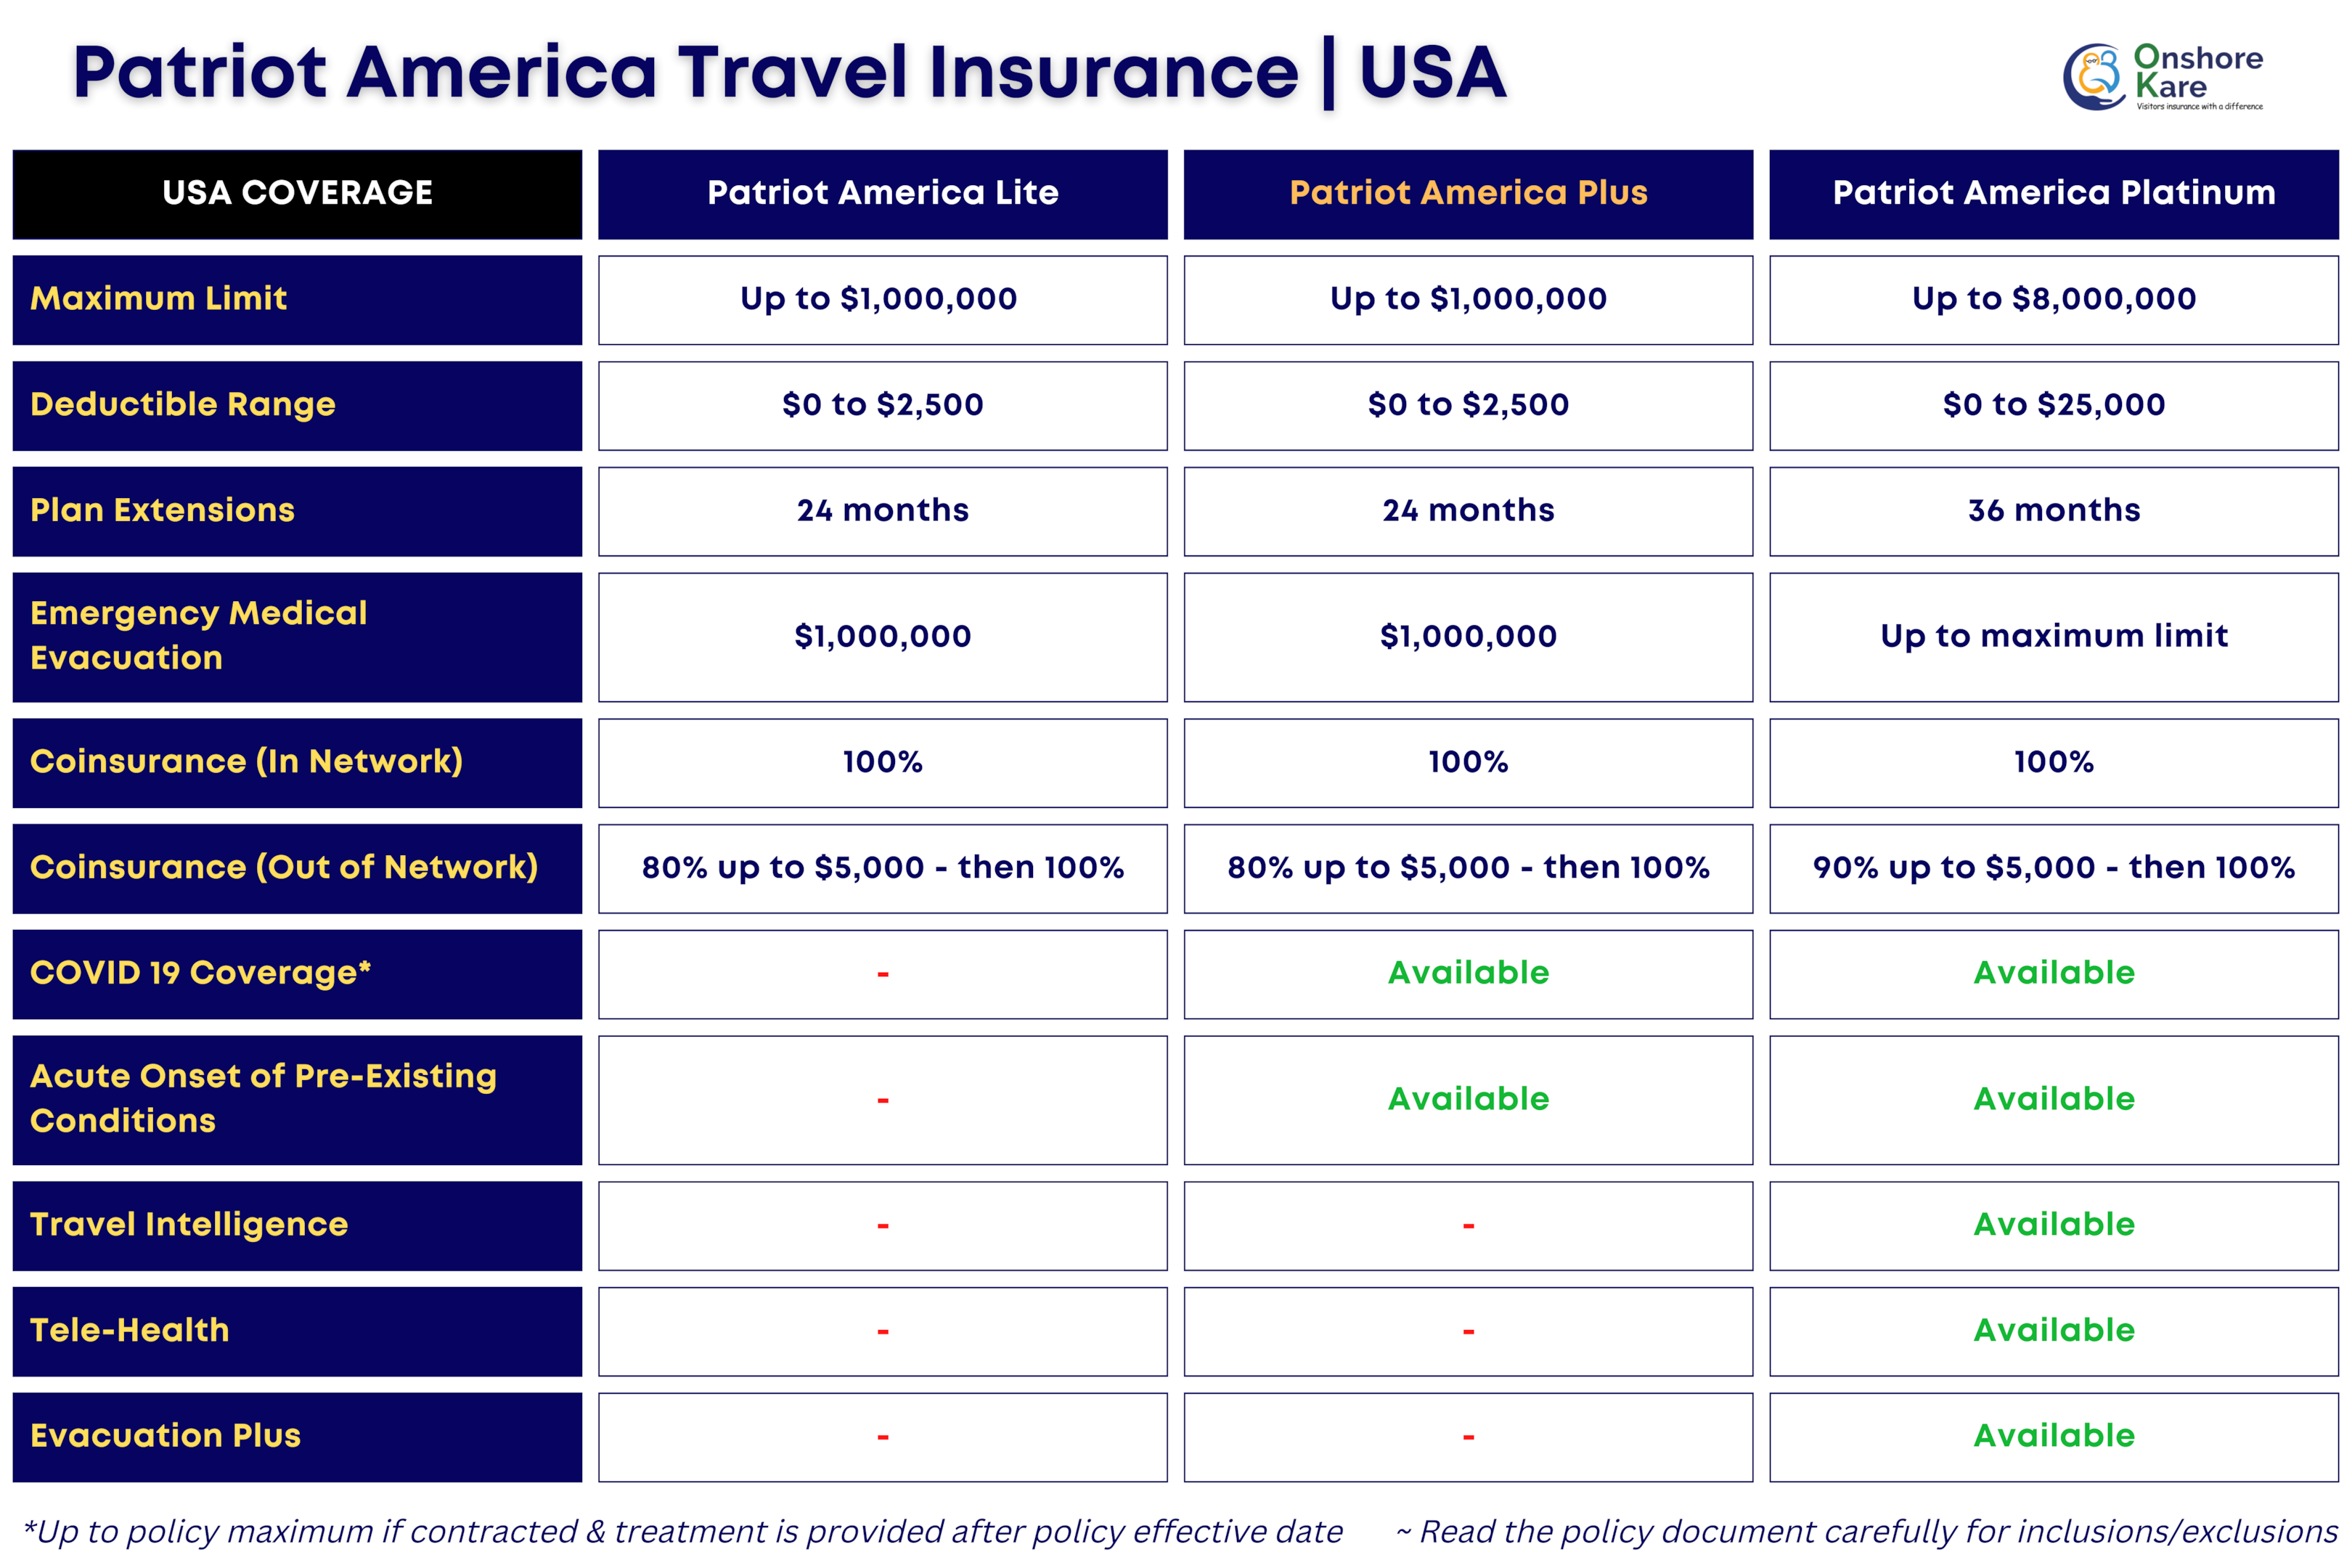 Patriot America Travel Insurance for USA